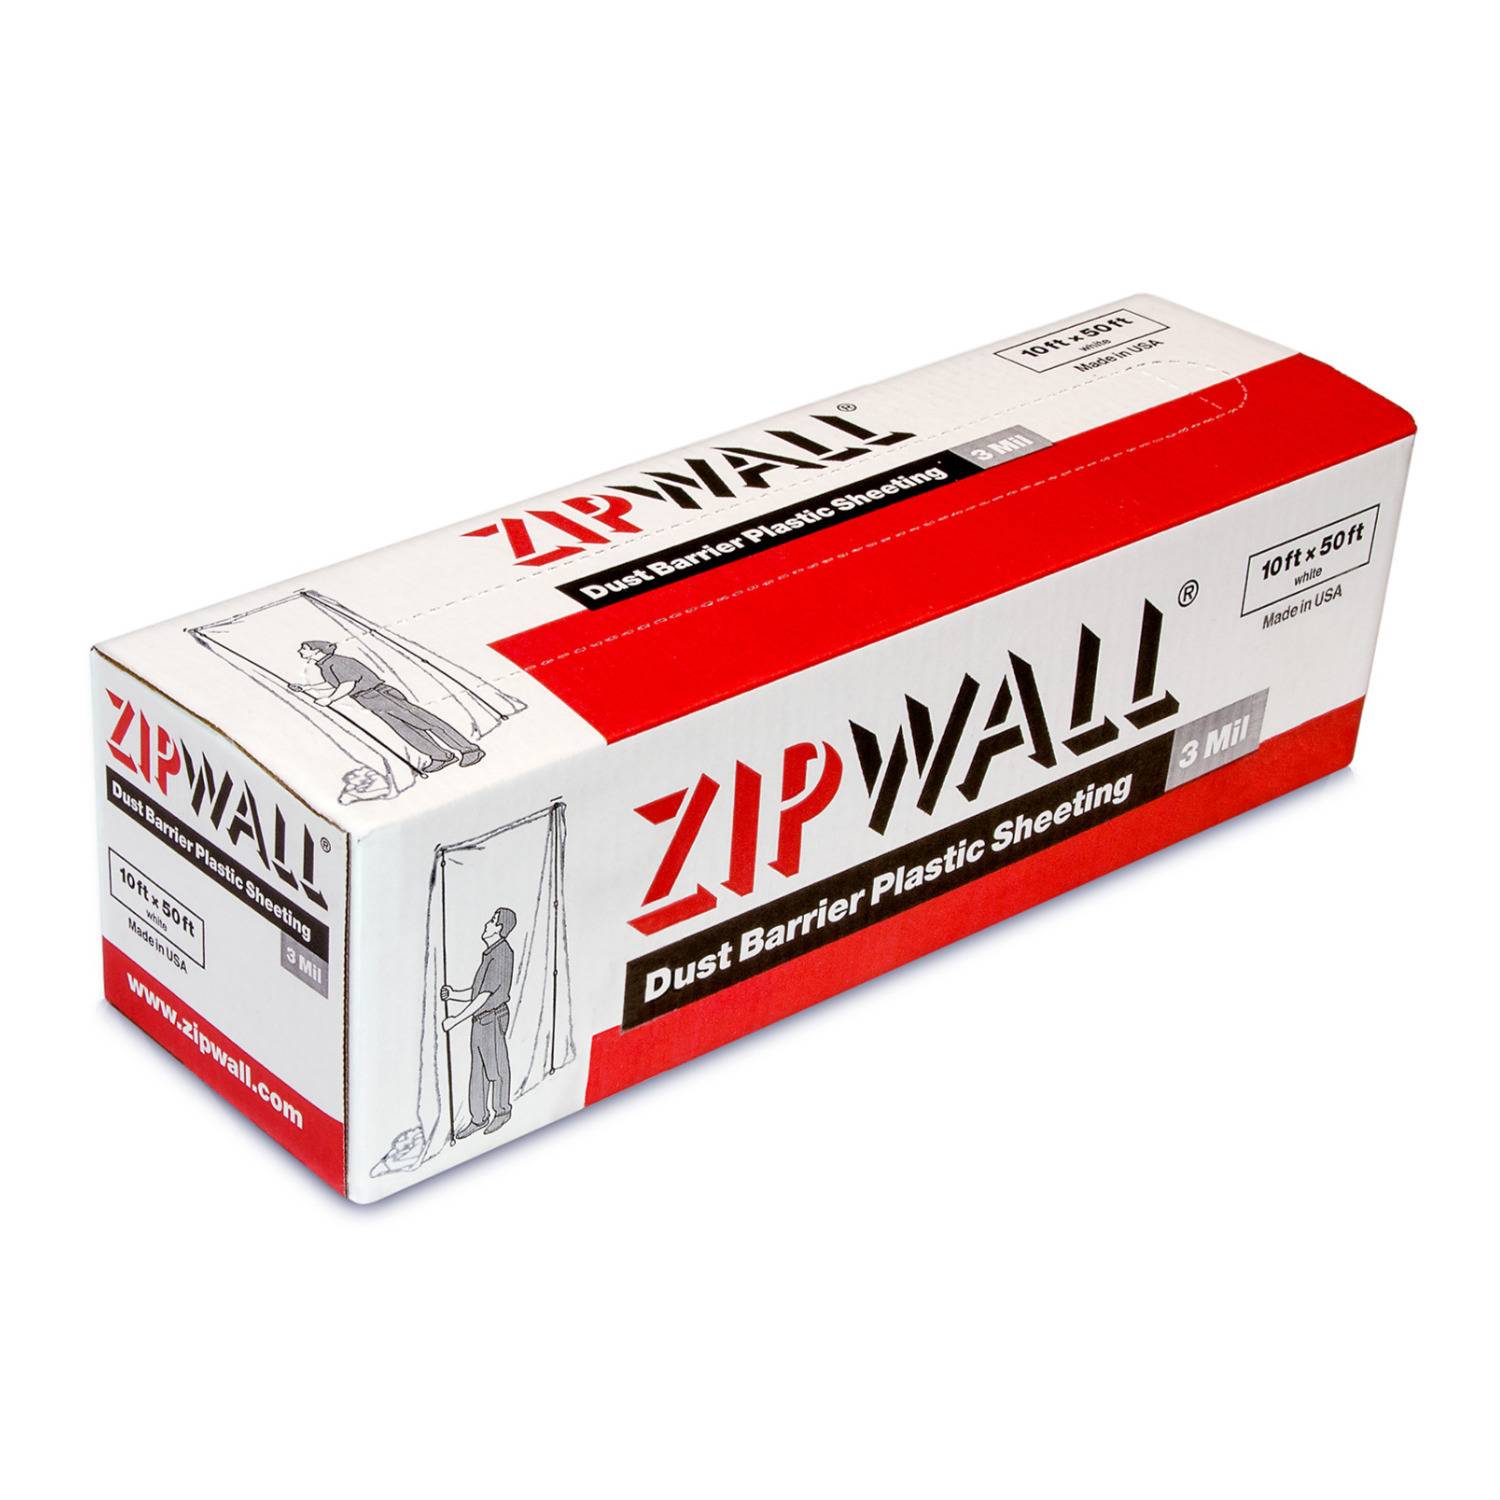 ZipWall PY50 Dust Barrier Plastic Sheeting (White)